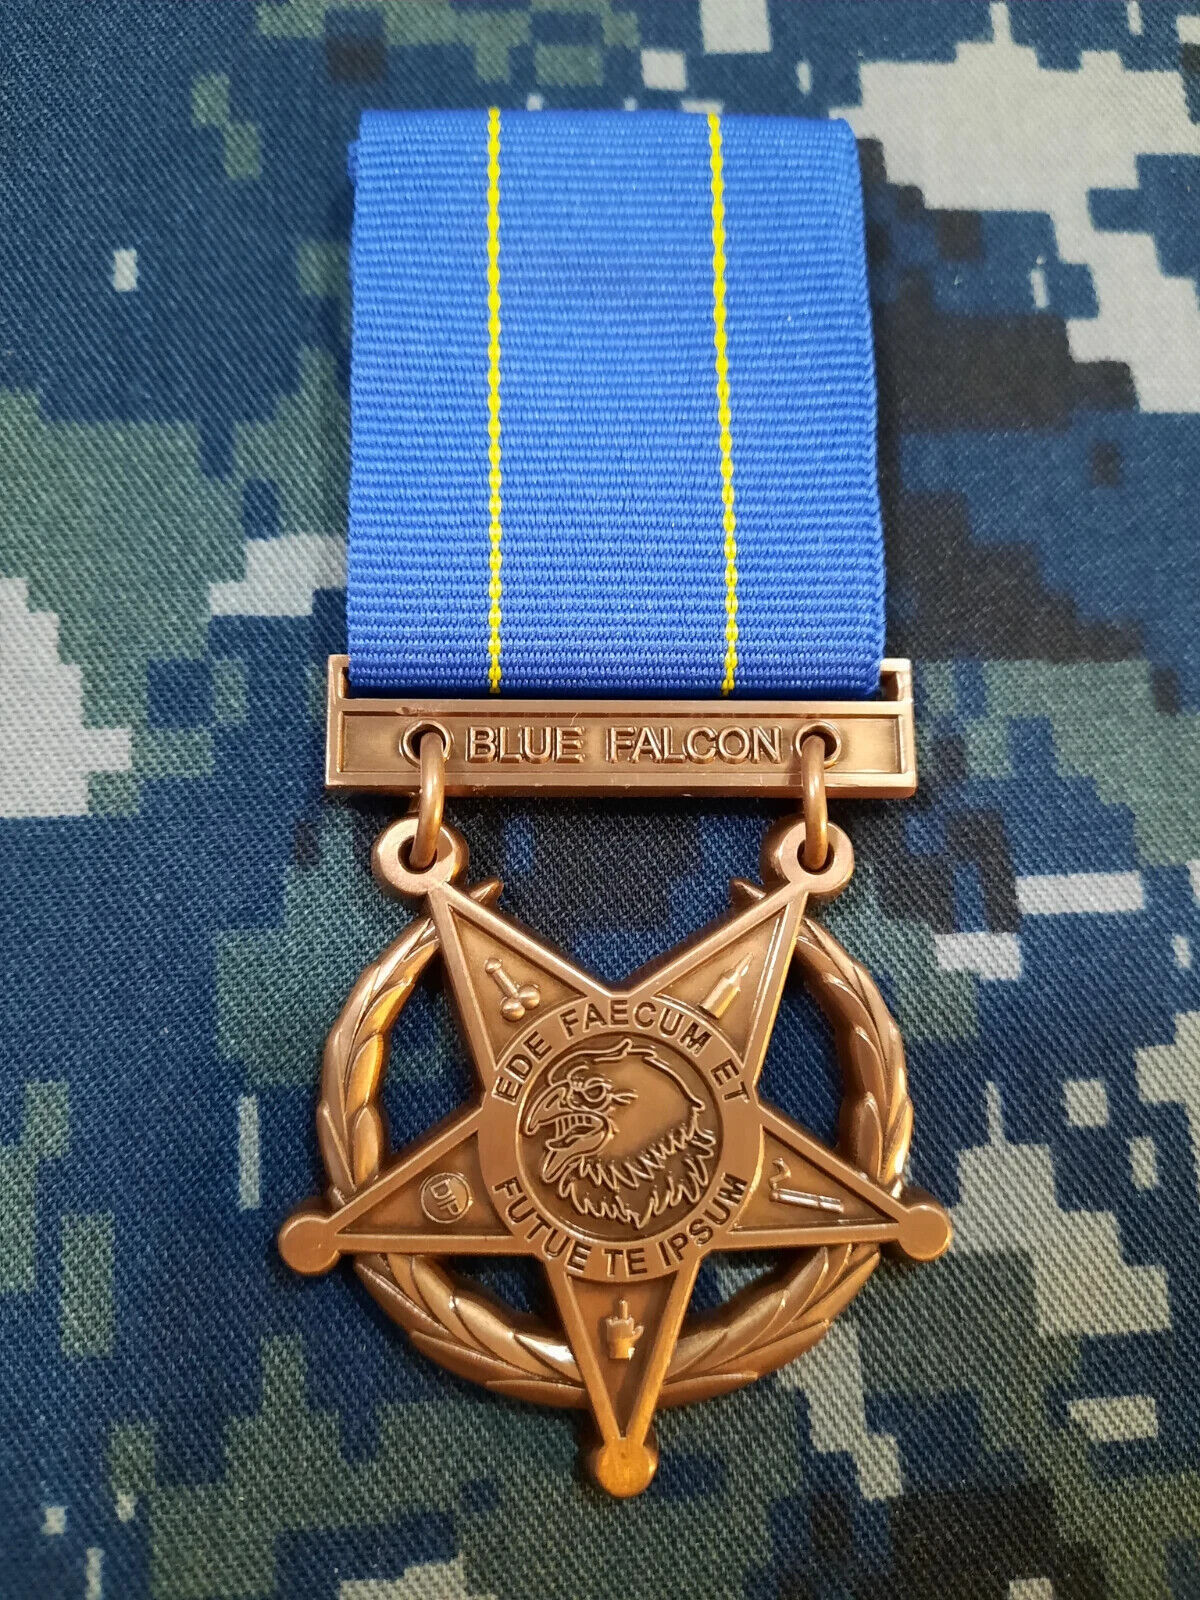 Blue Falcon Medal MARINES Army Navy Coast guard retirement Active USMC Award